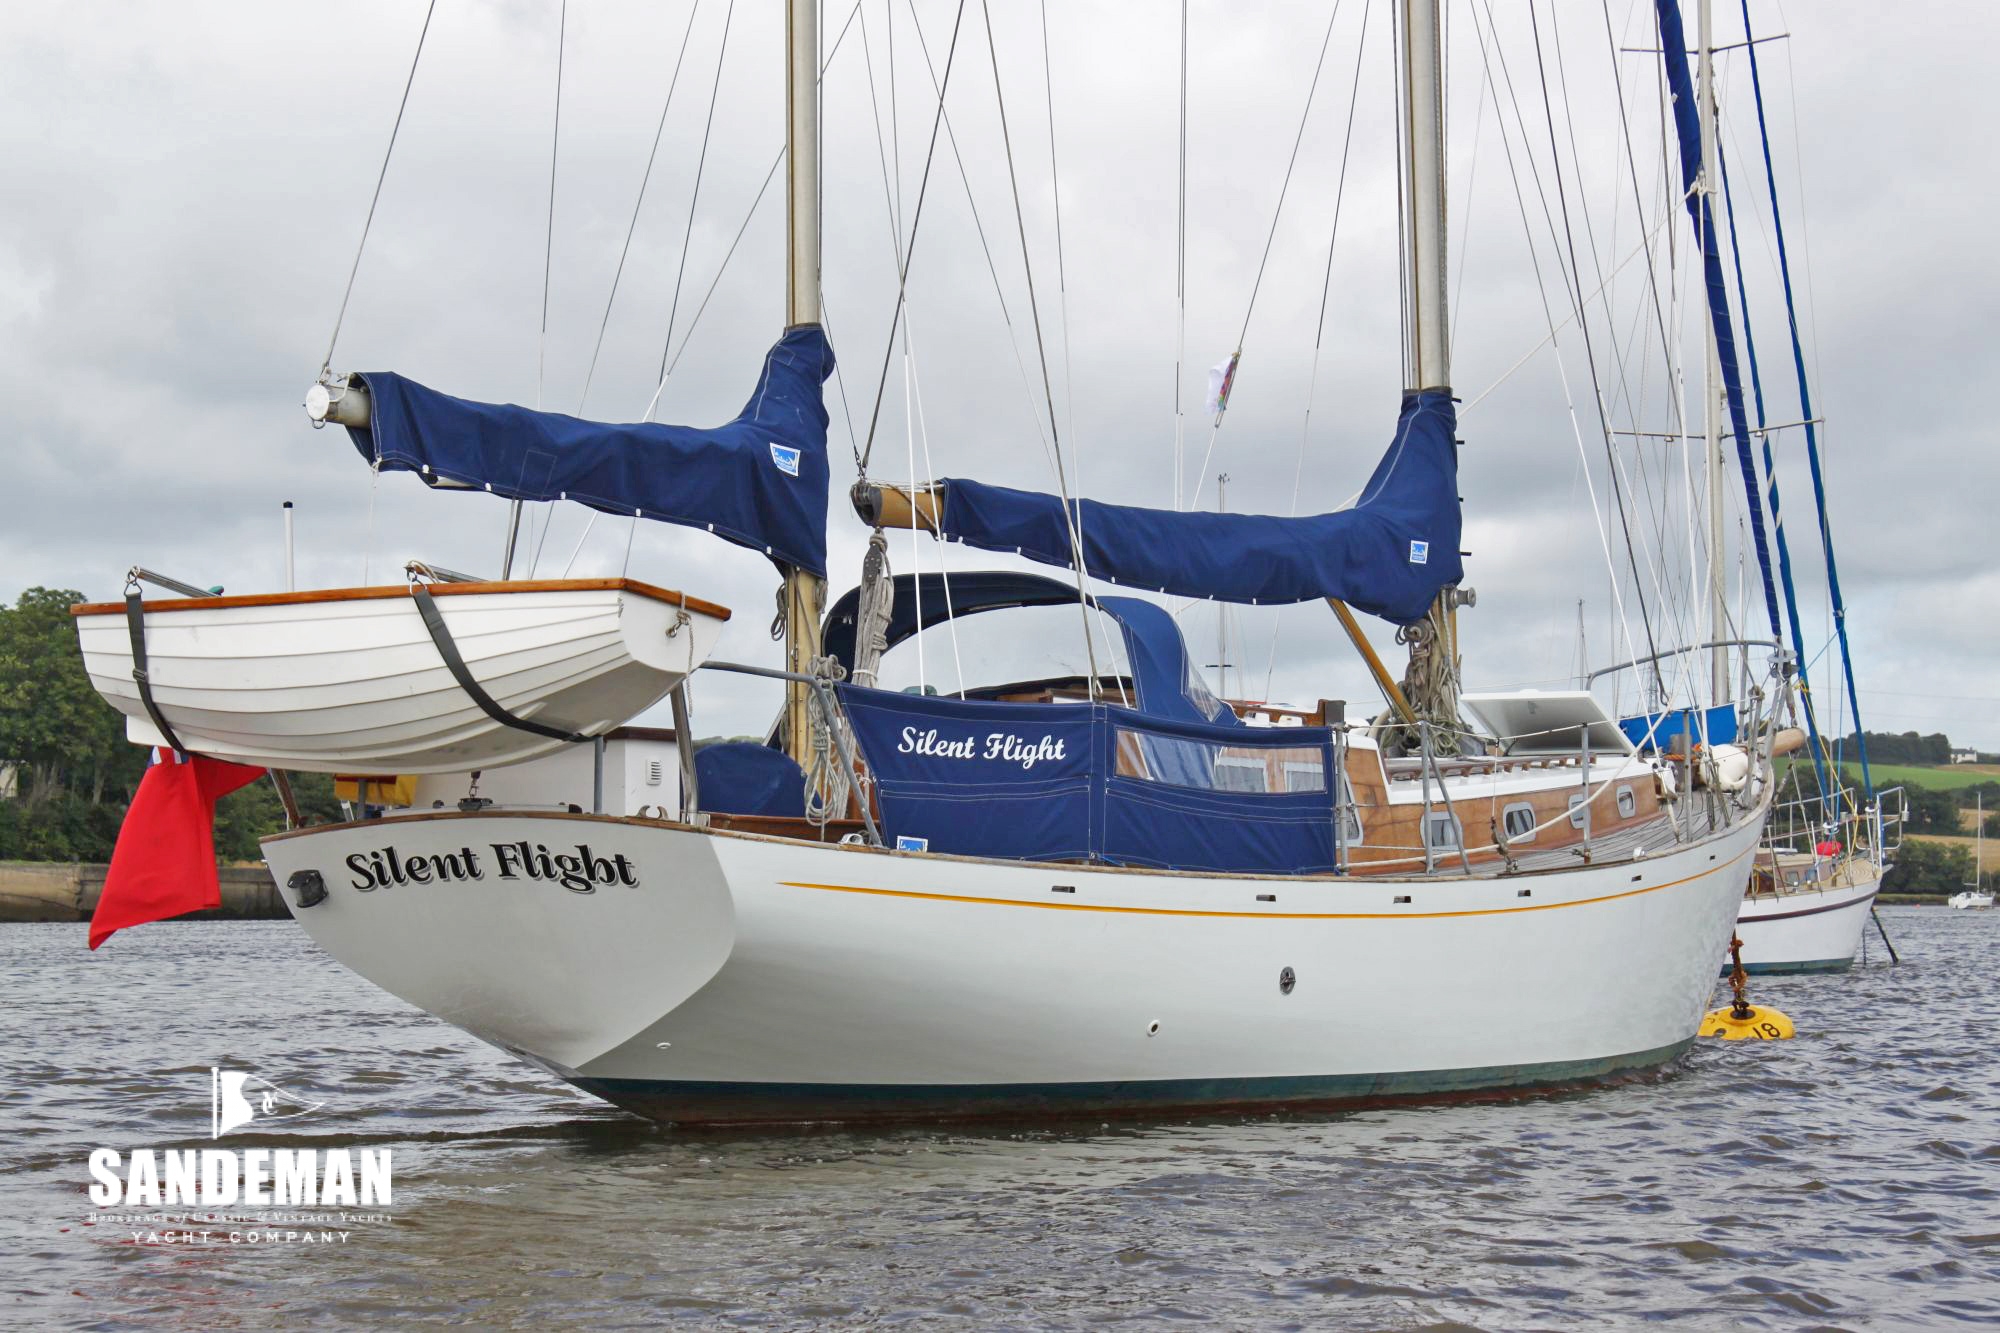 40ft ketch sailboat